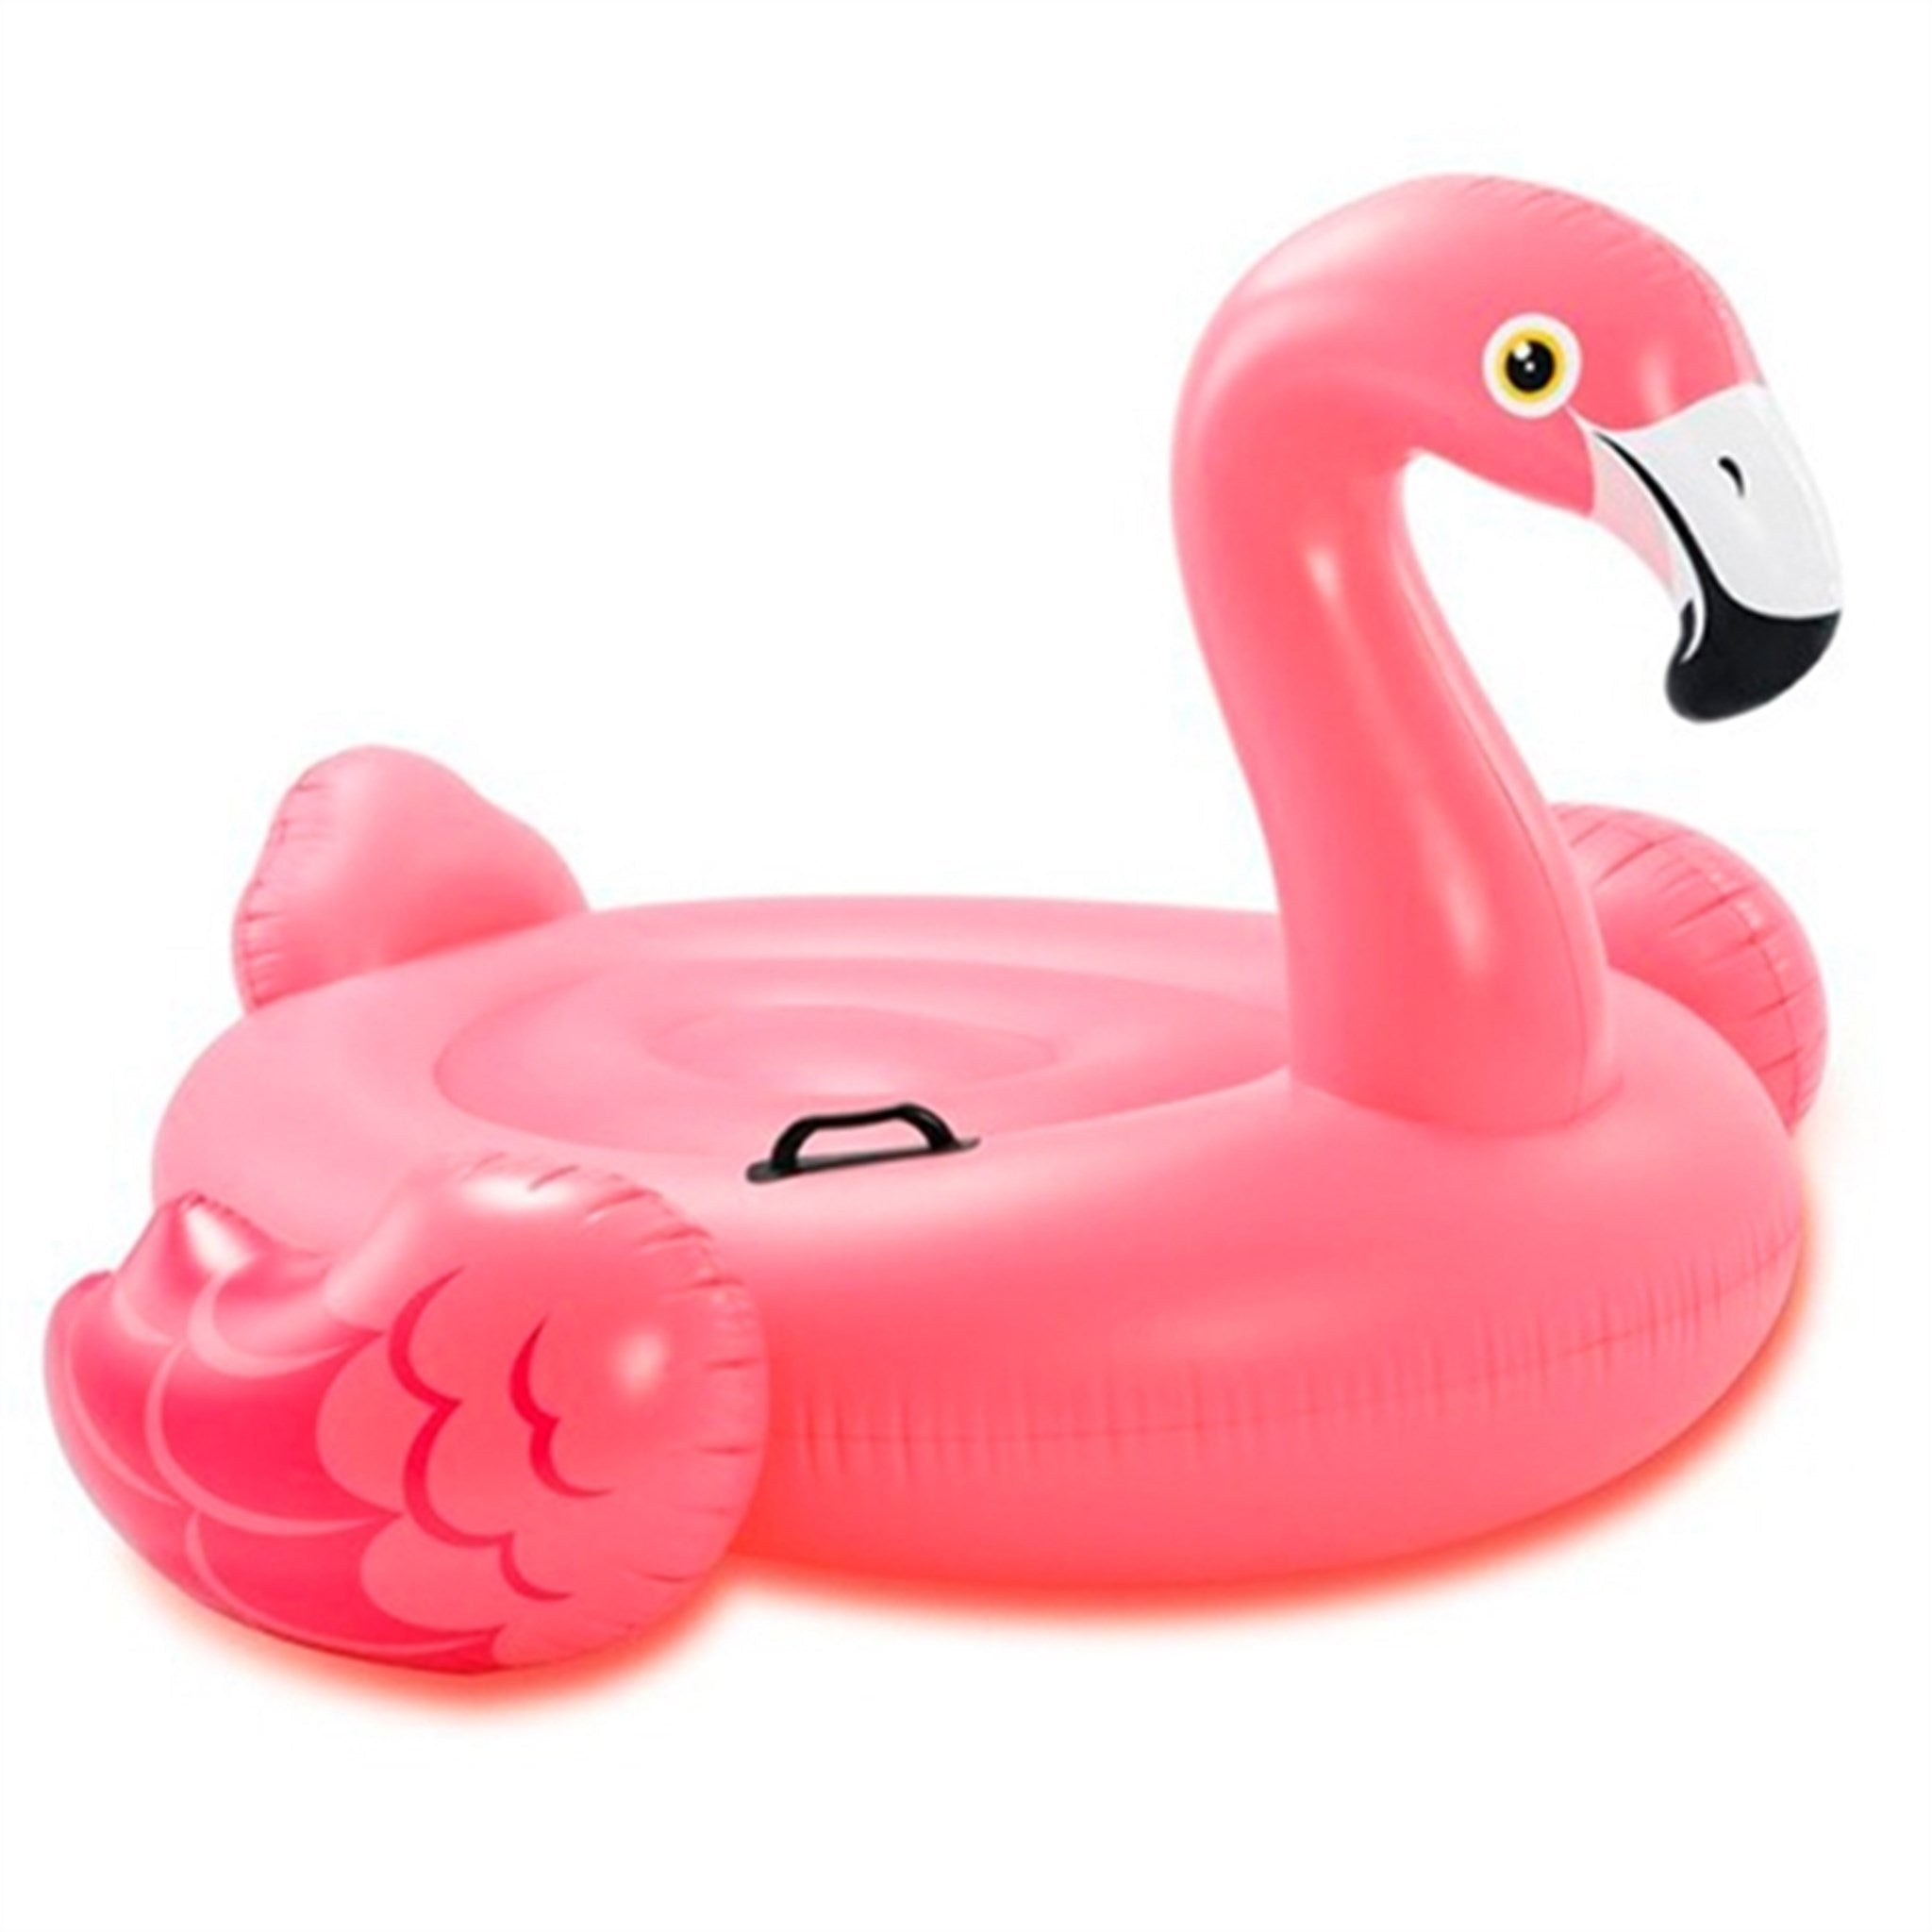 INTEX® Flamingo Ride-On